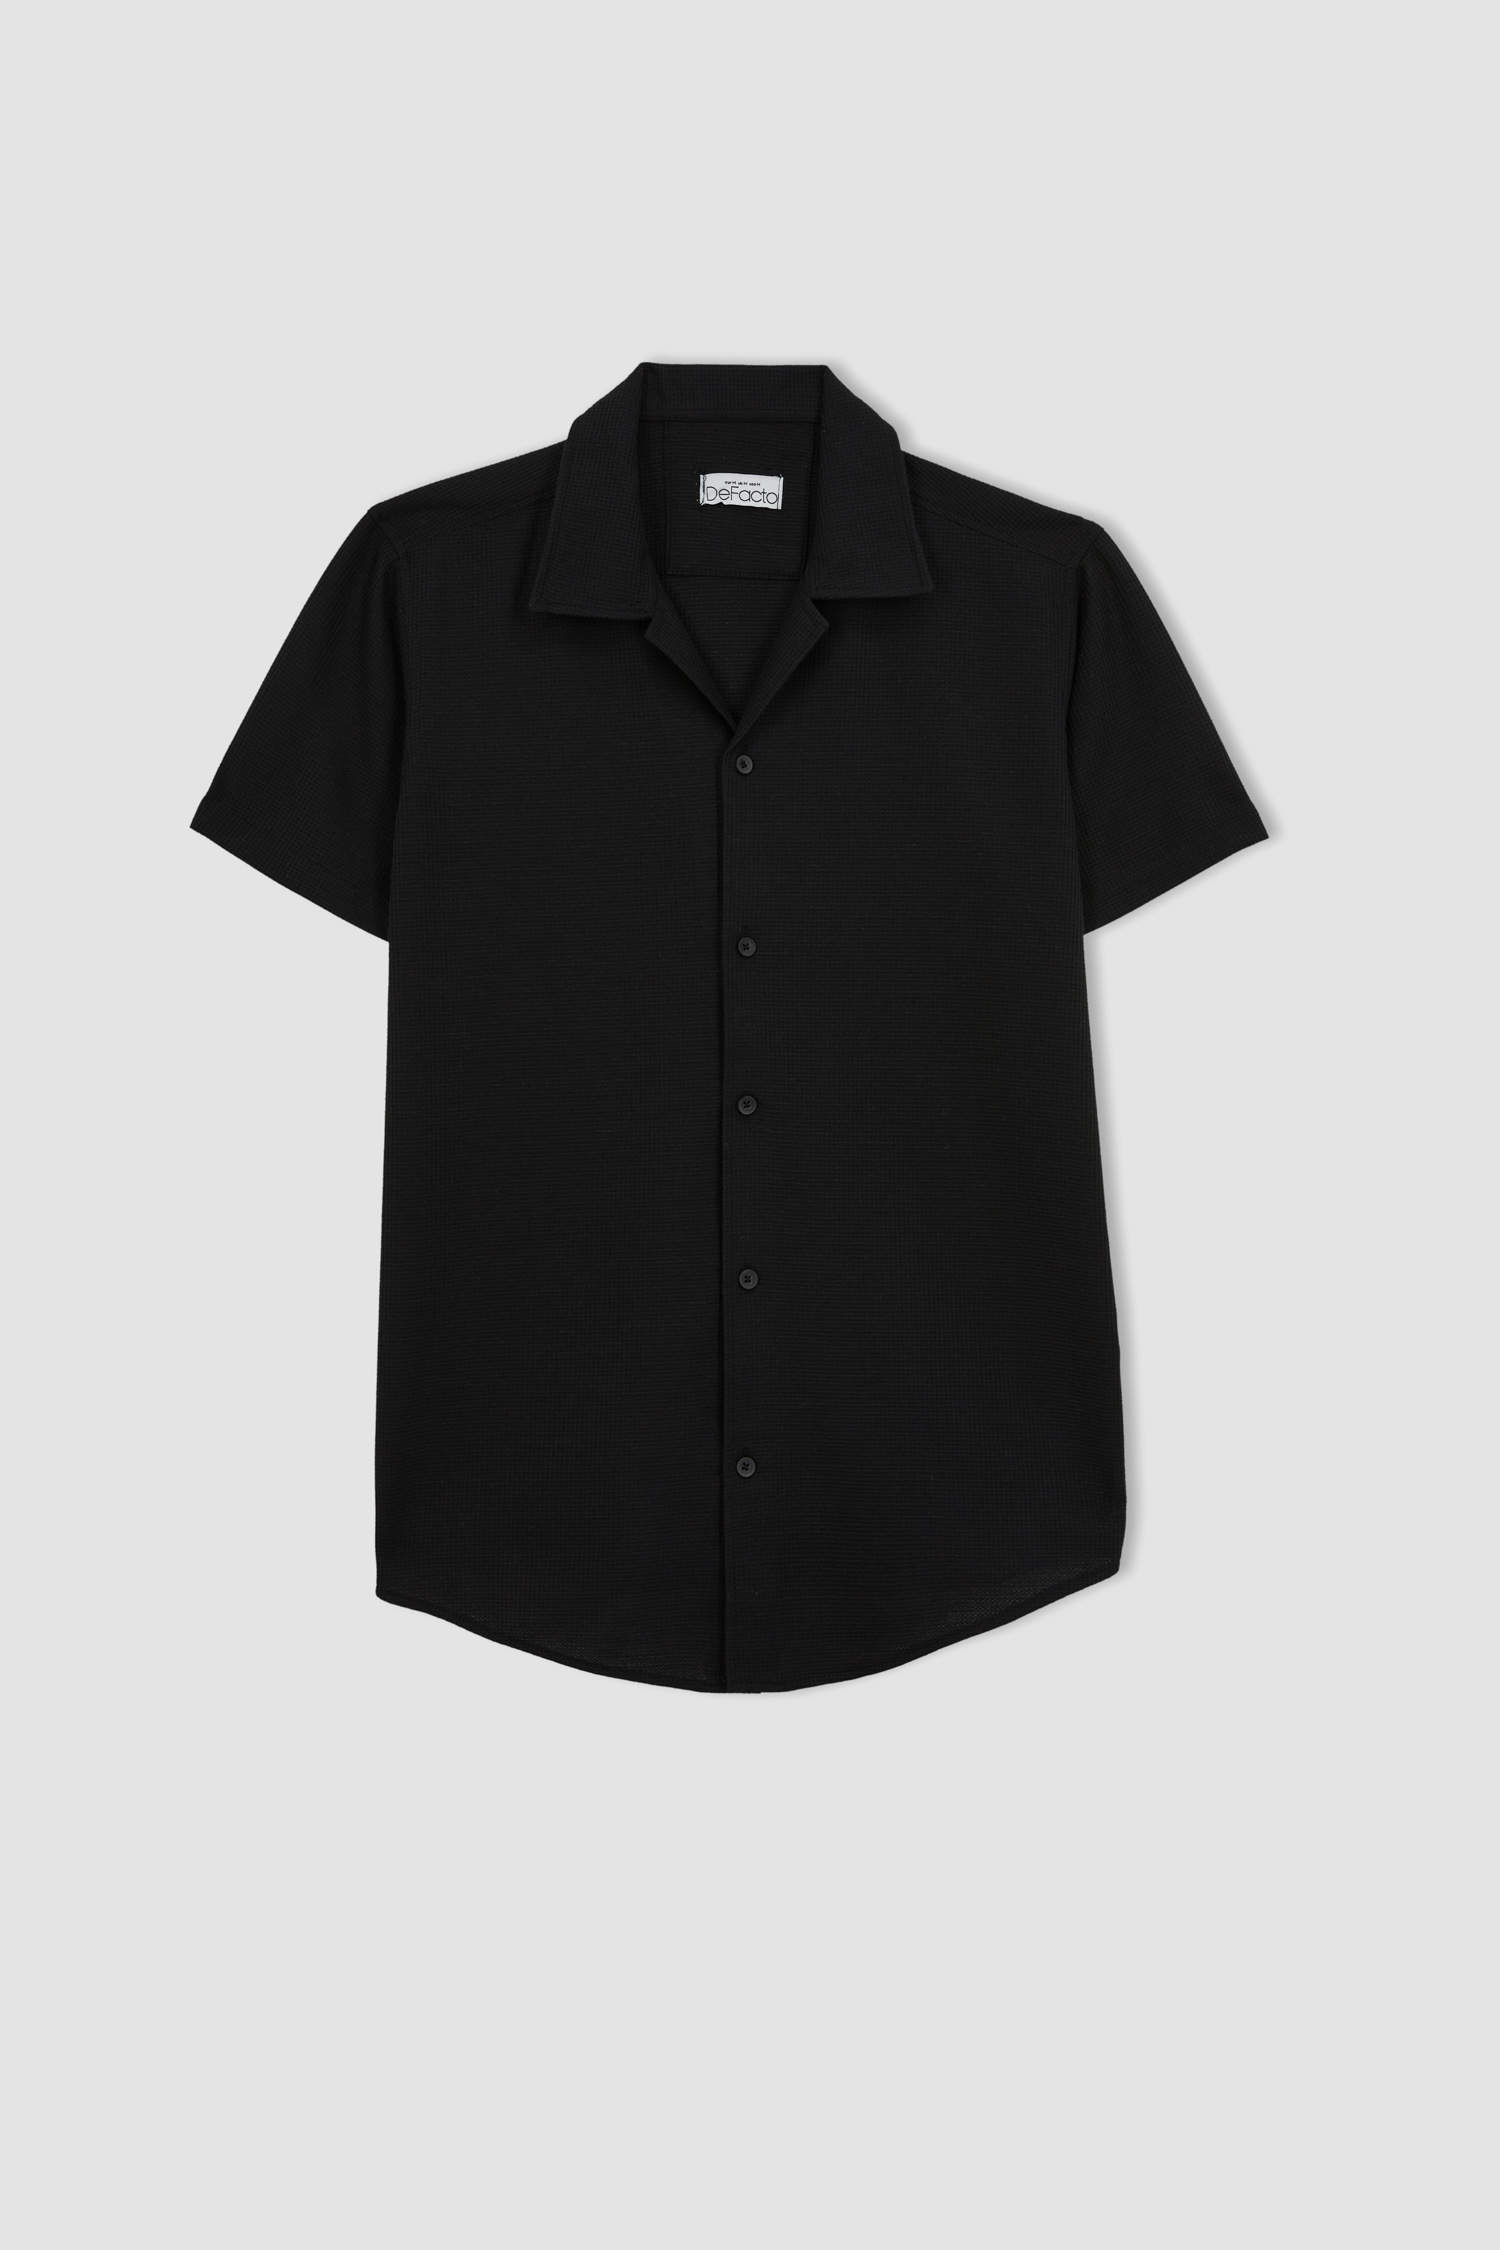 Black Man Slim Fit Short Sleeve Shirt 2910031 | DeFacto